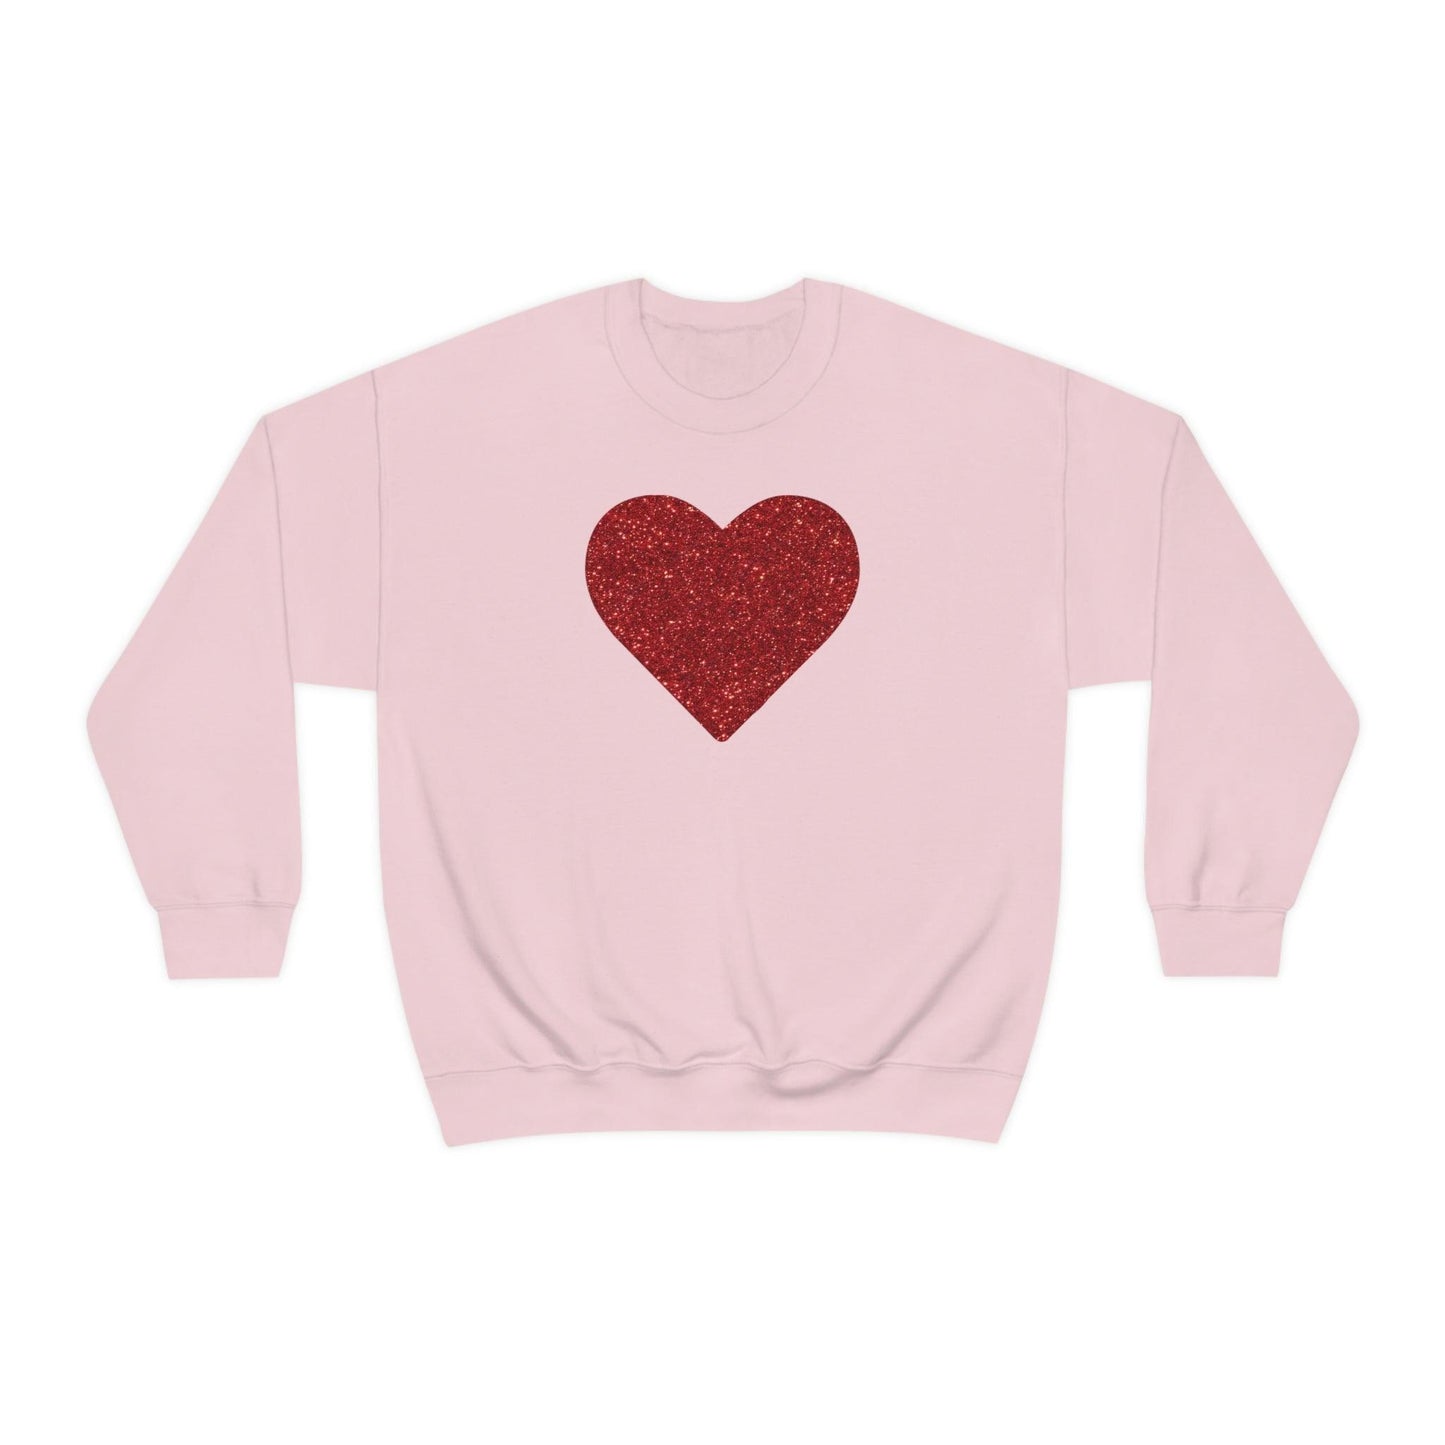 Heart Sweatshirt Love sweatshirt Love Shirt Cute Love Shirt with Heart Valentine sweatshirt - Matching Love shirt Girlfriend gift Boyfriend